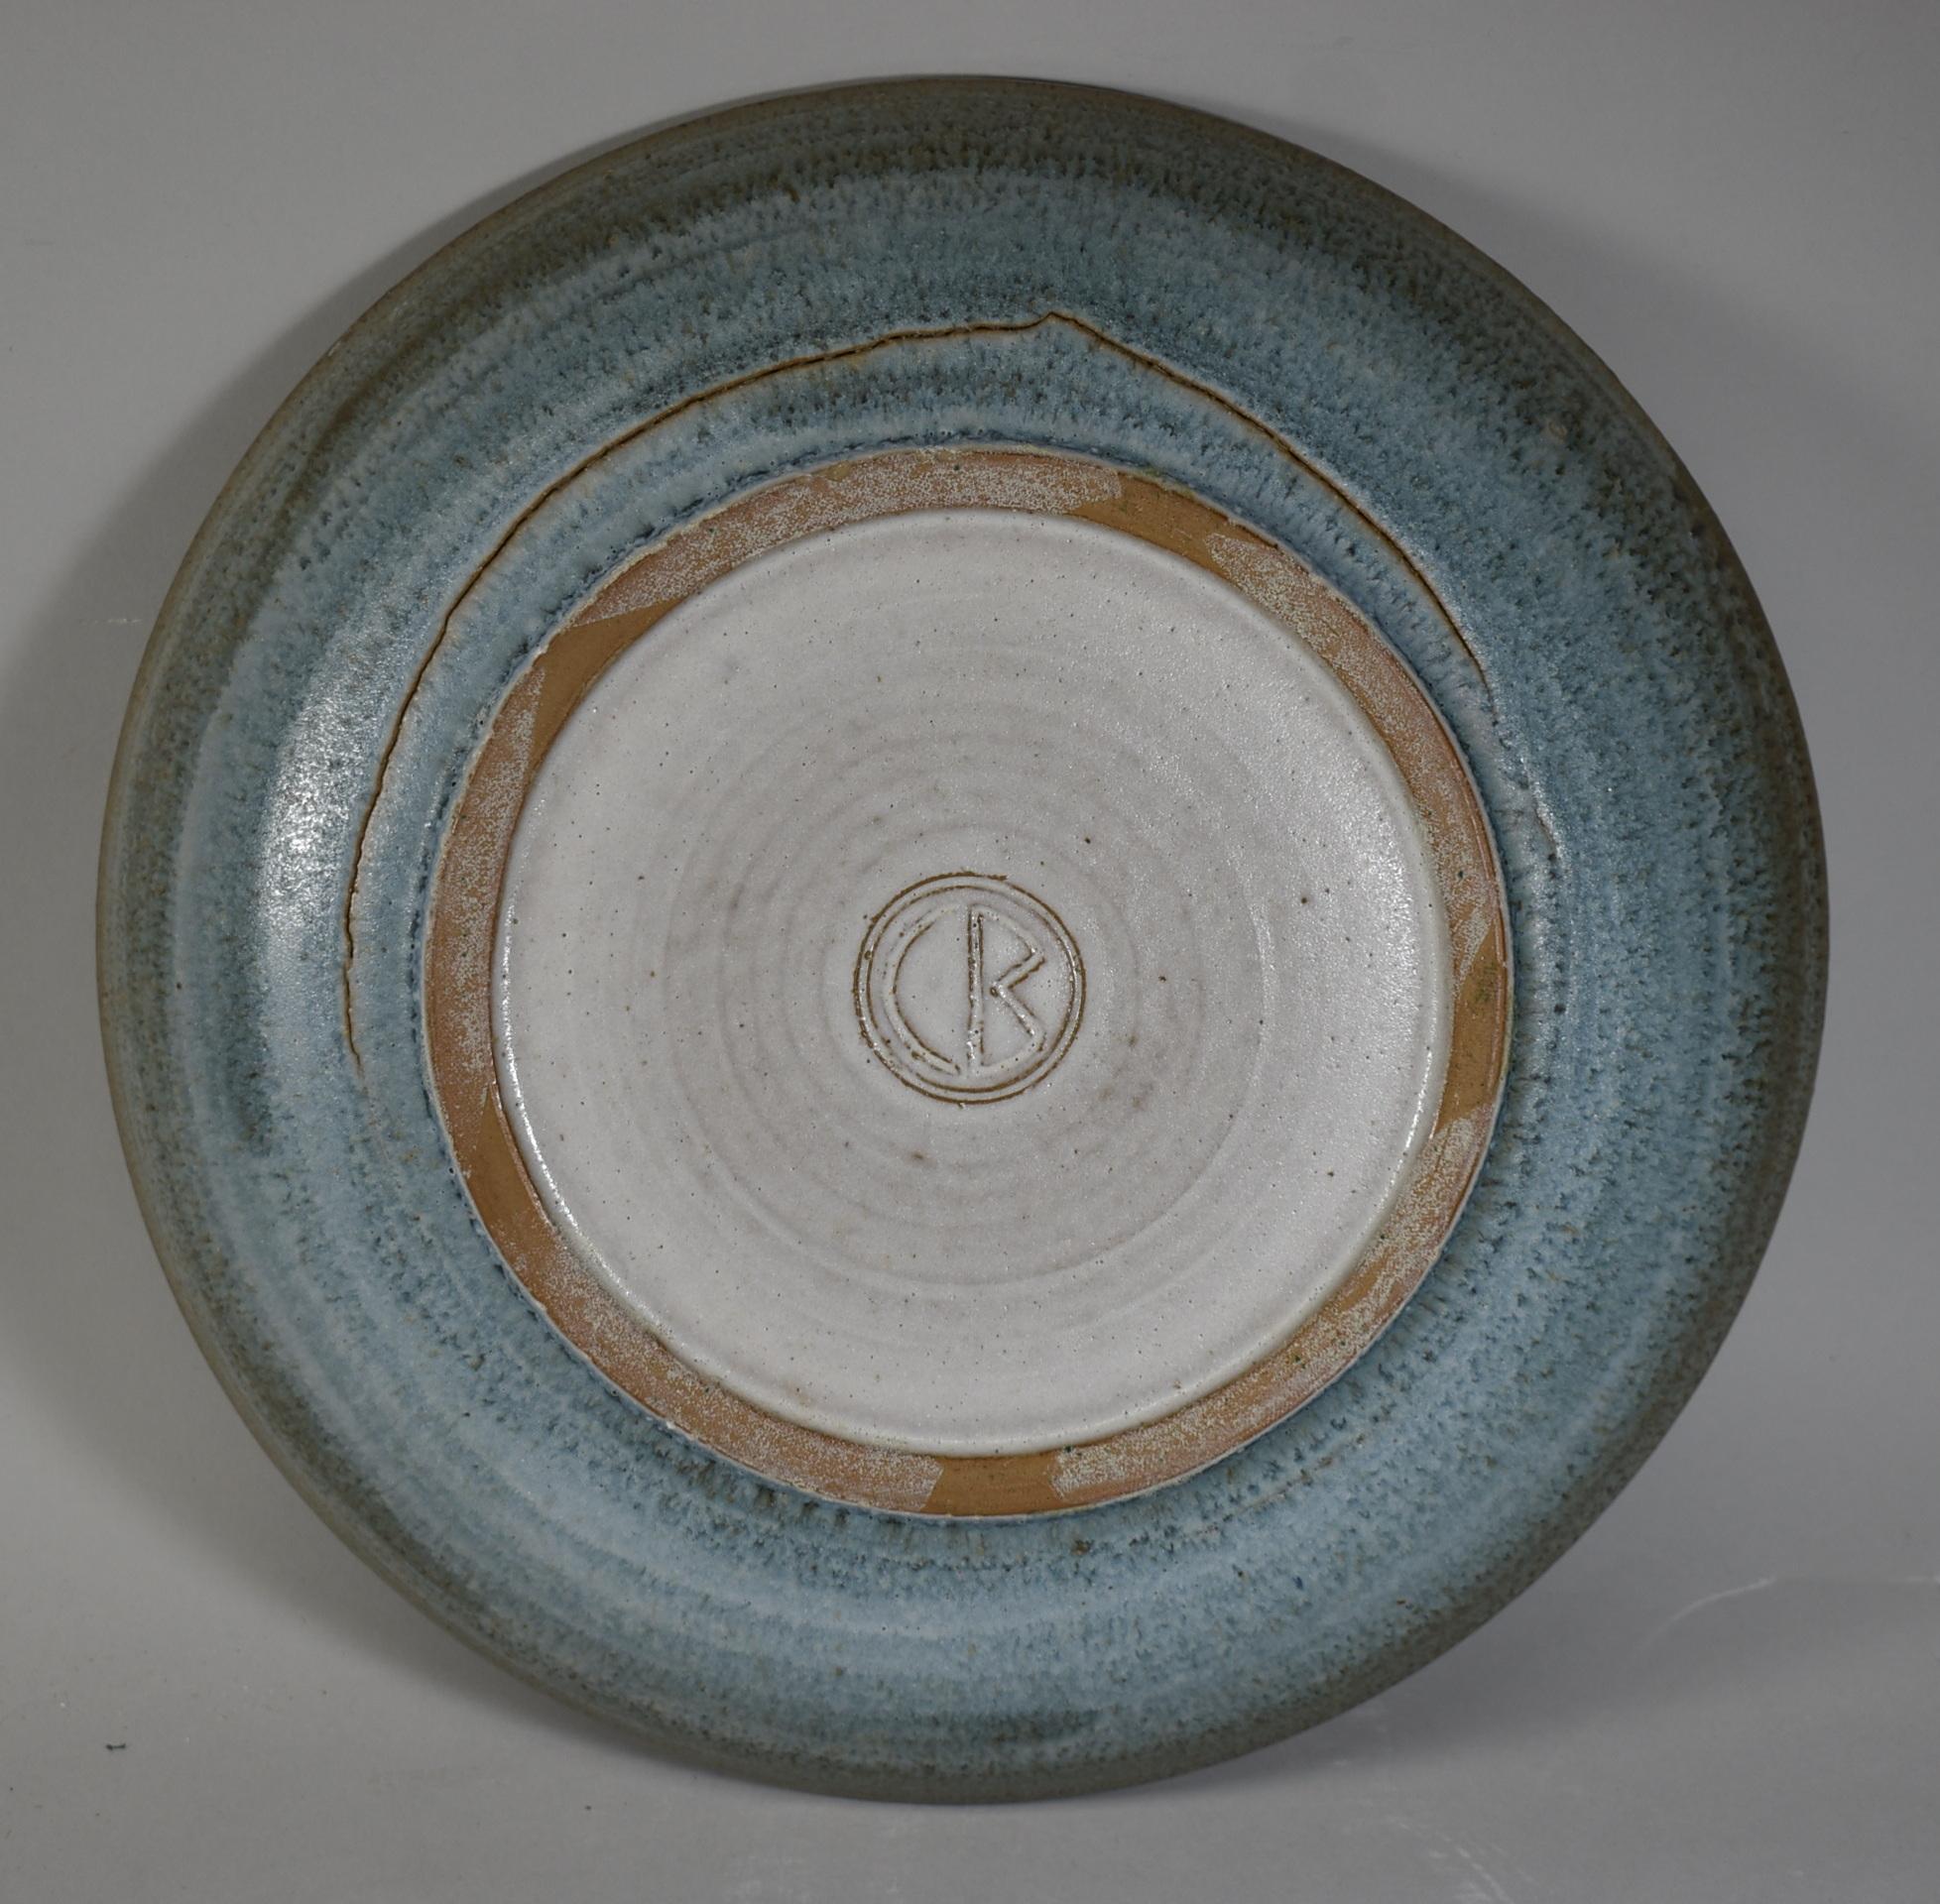 Modern Vintage Clyde Burt Ceramic Pottery Bowl 14.75 Circa 1960's Blue Rust Earth Tones For Sale